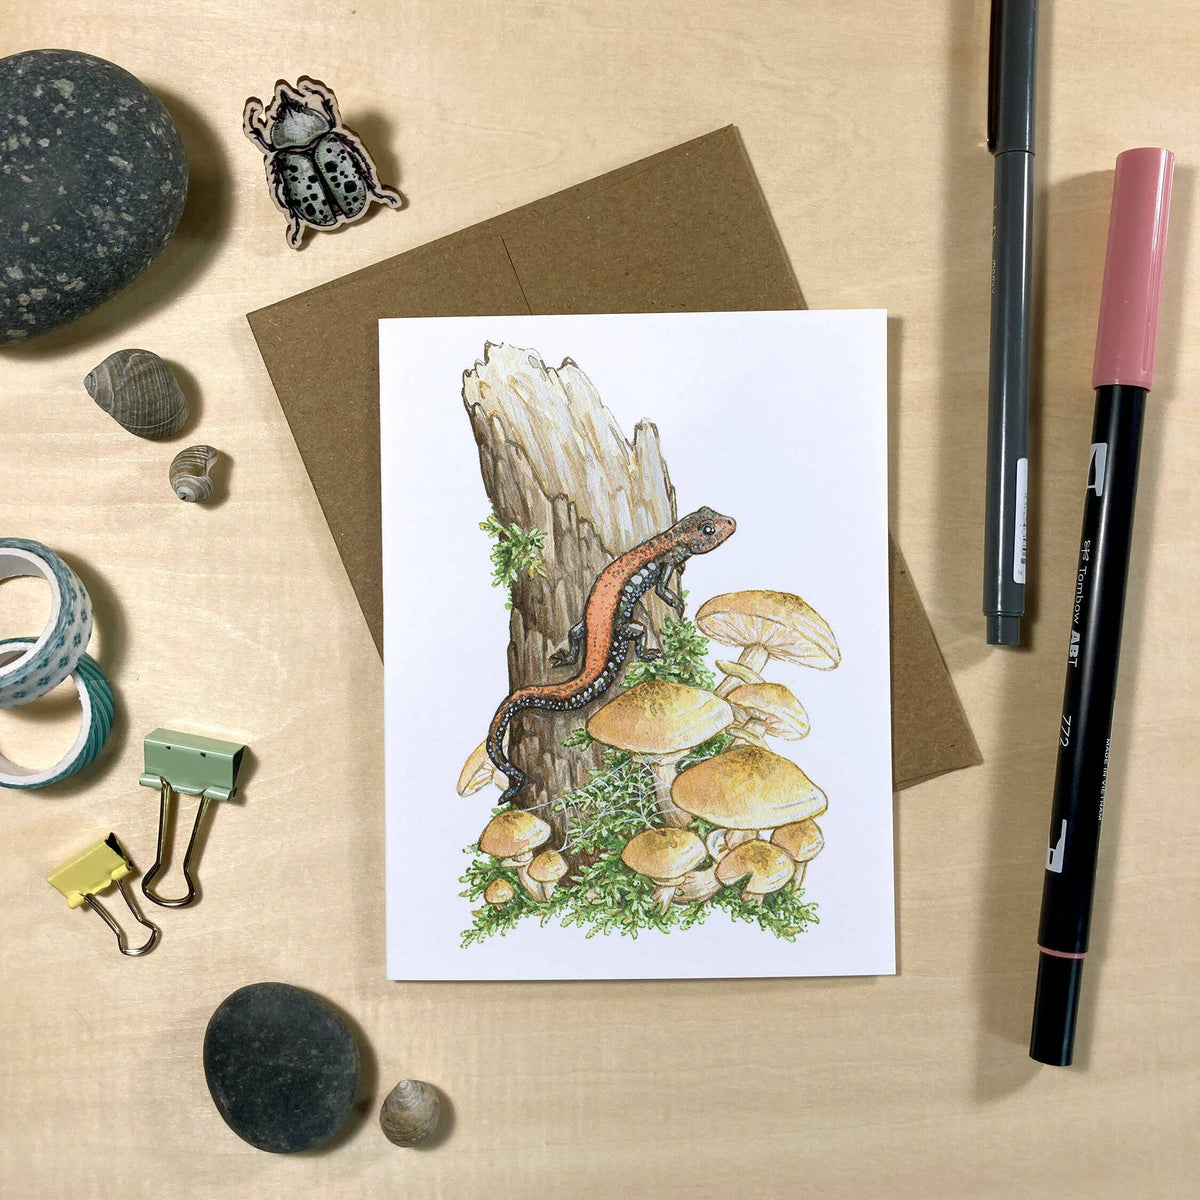 Amphibians &amp; Fungi On Blank Recycled Cards (Set of 6)